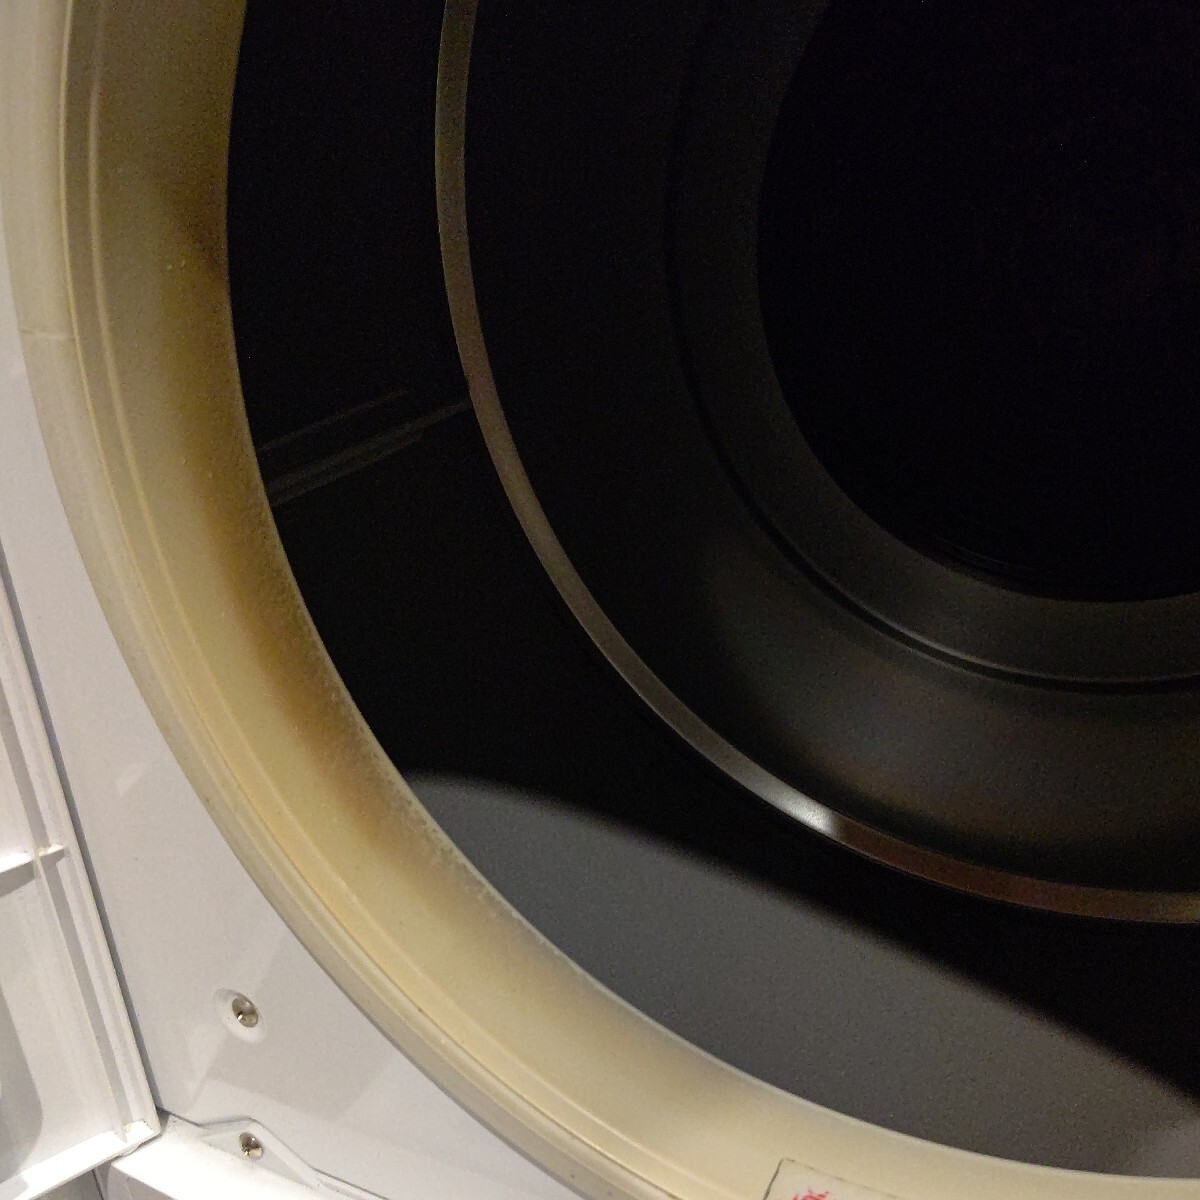 HITACHI Hitachi dehumidification shape electric dryer stand attaching DE-N50WV pure white white 2017 year made 